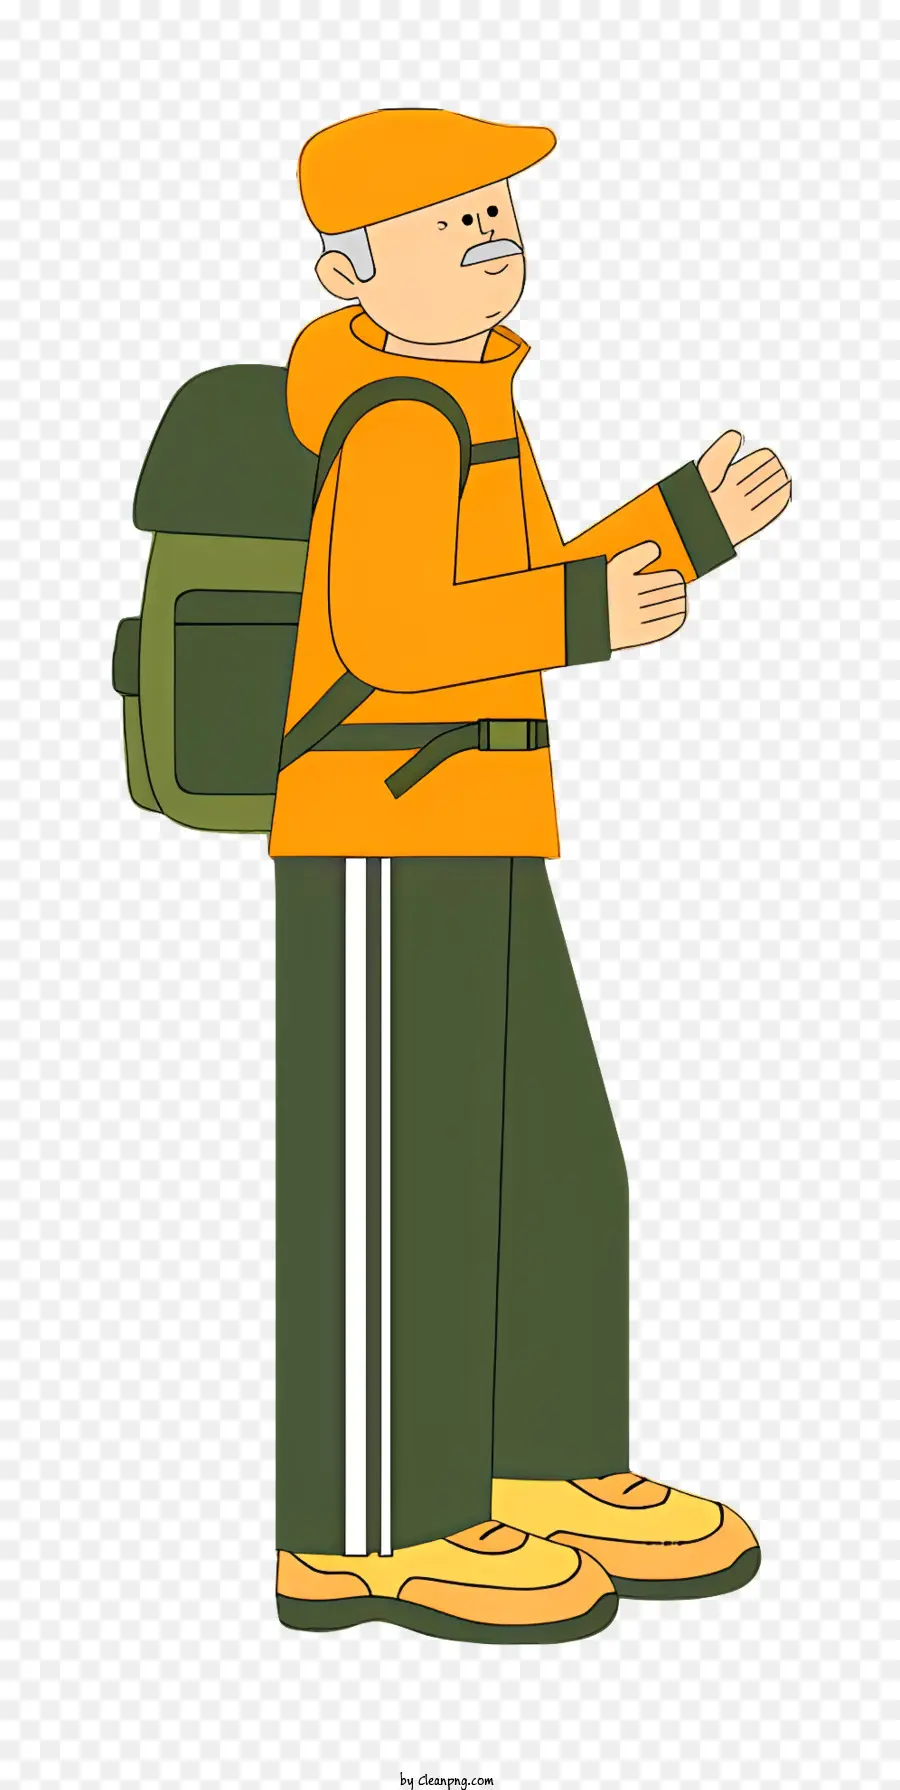 Personaje De Dibujos Animados，Camisa Naranja Y Verde PNG